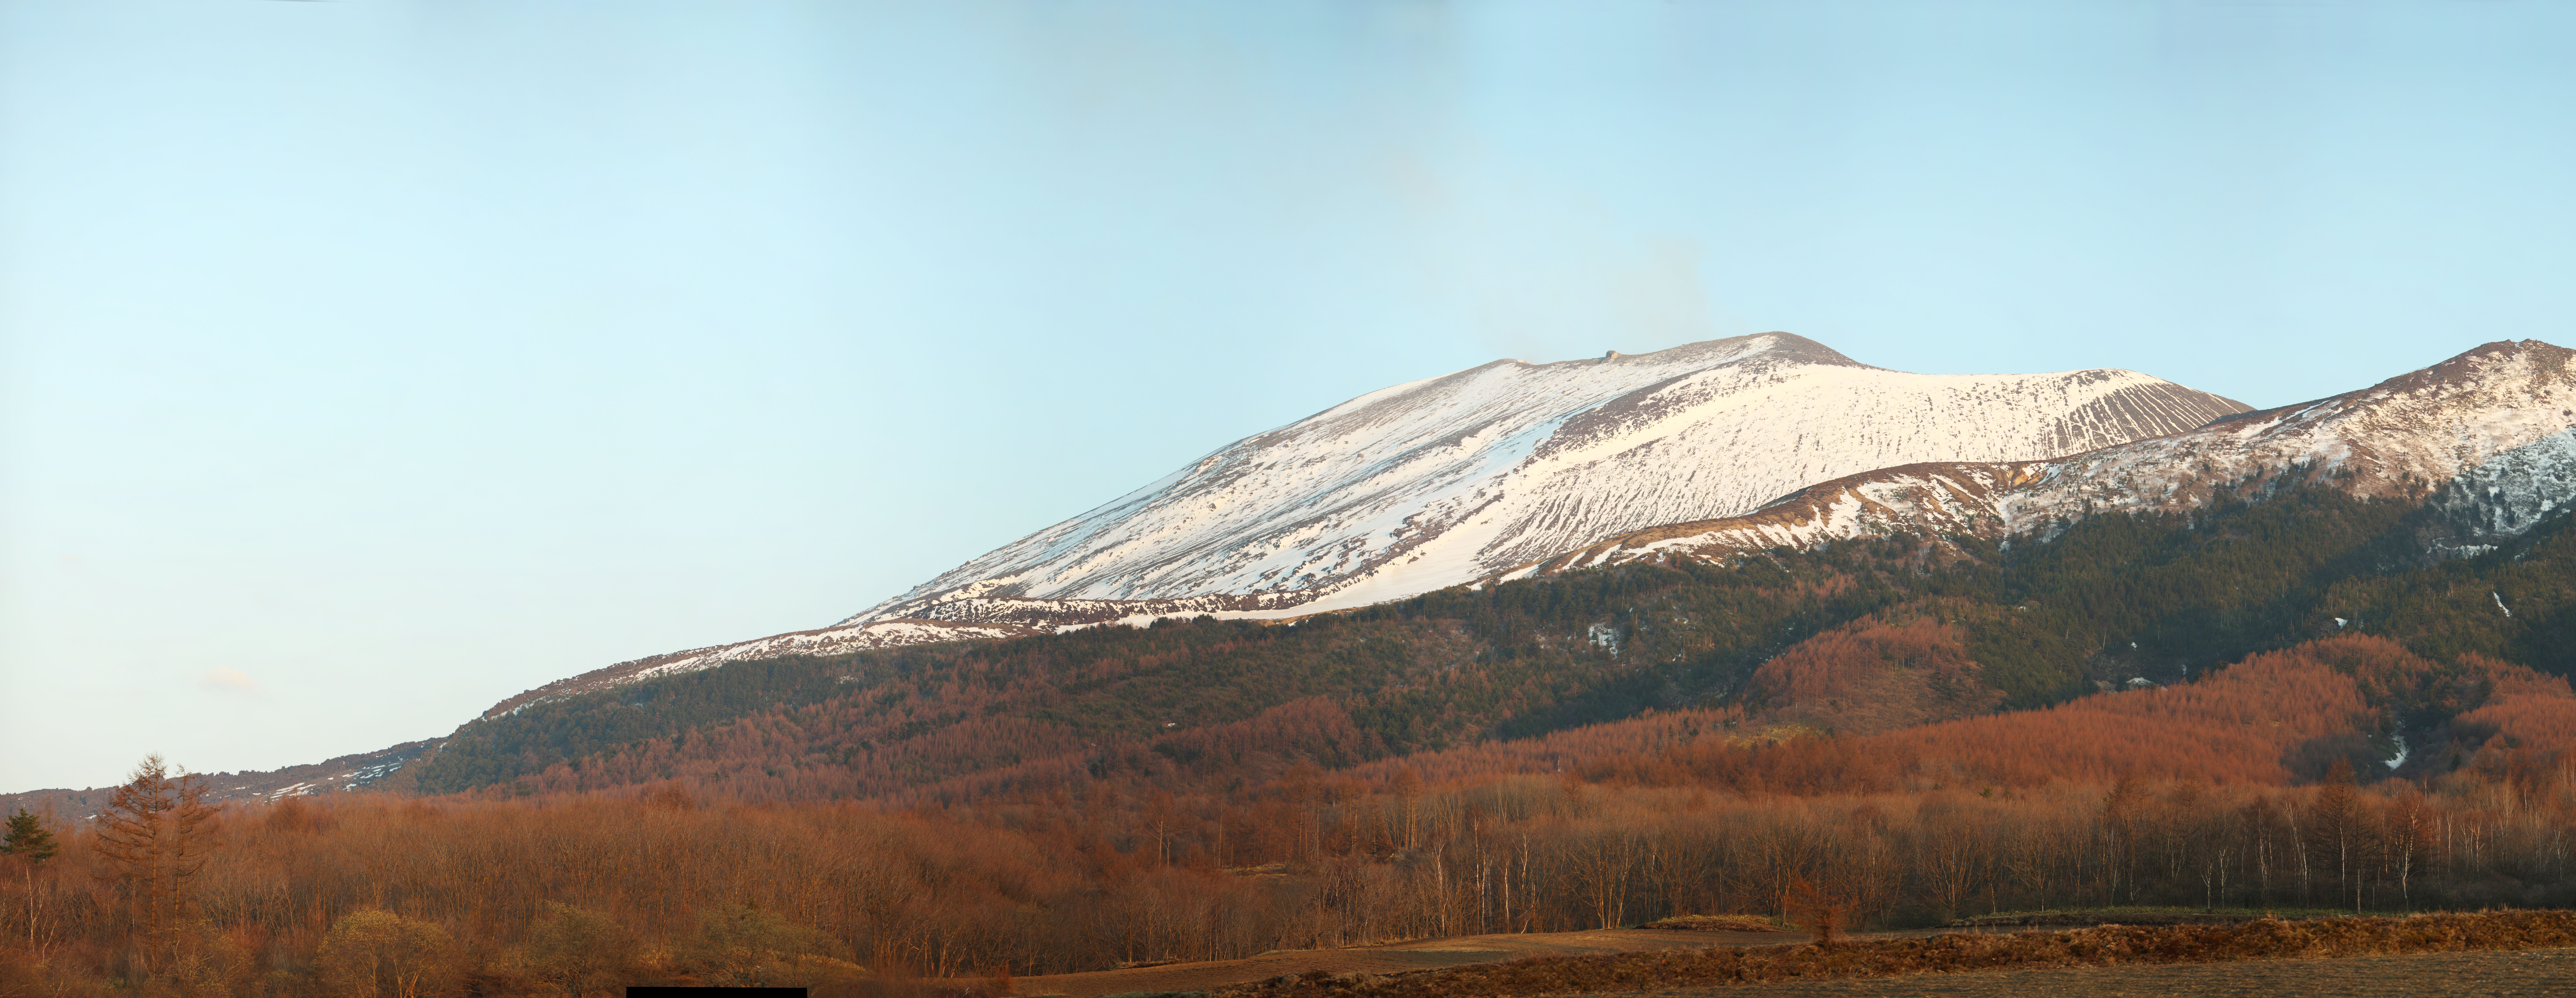 photo,material,free,landscape,picture,stock photo,Creative Commons,Mt. Asama-yama, Snow, volcano, Bave rock, Lava